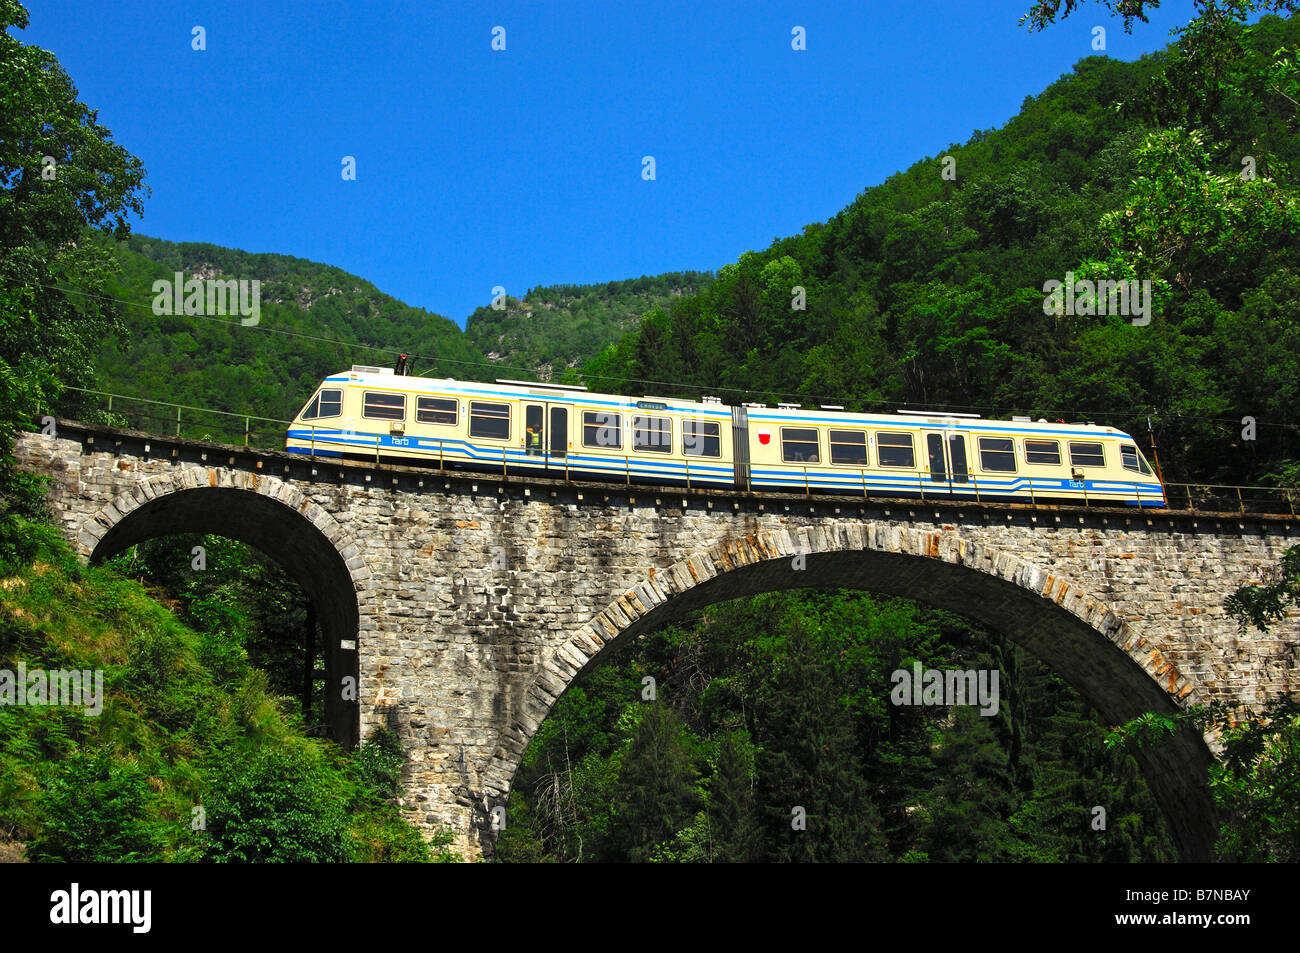 The Centovalli train crosses a viaduct in the Centovalli valley, Ticino, Switzerland Stock Photo